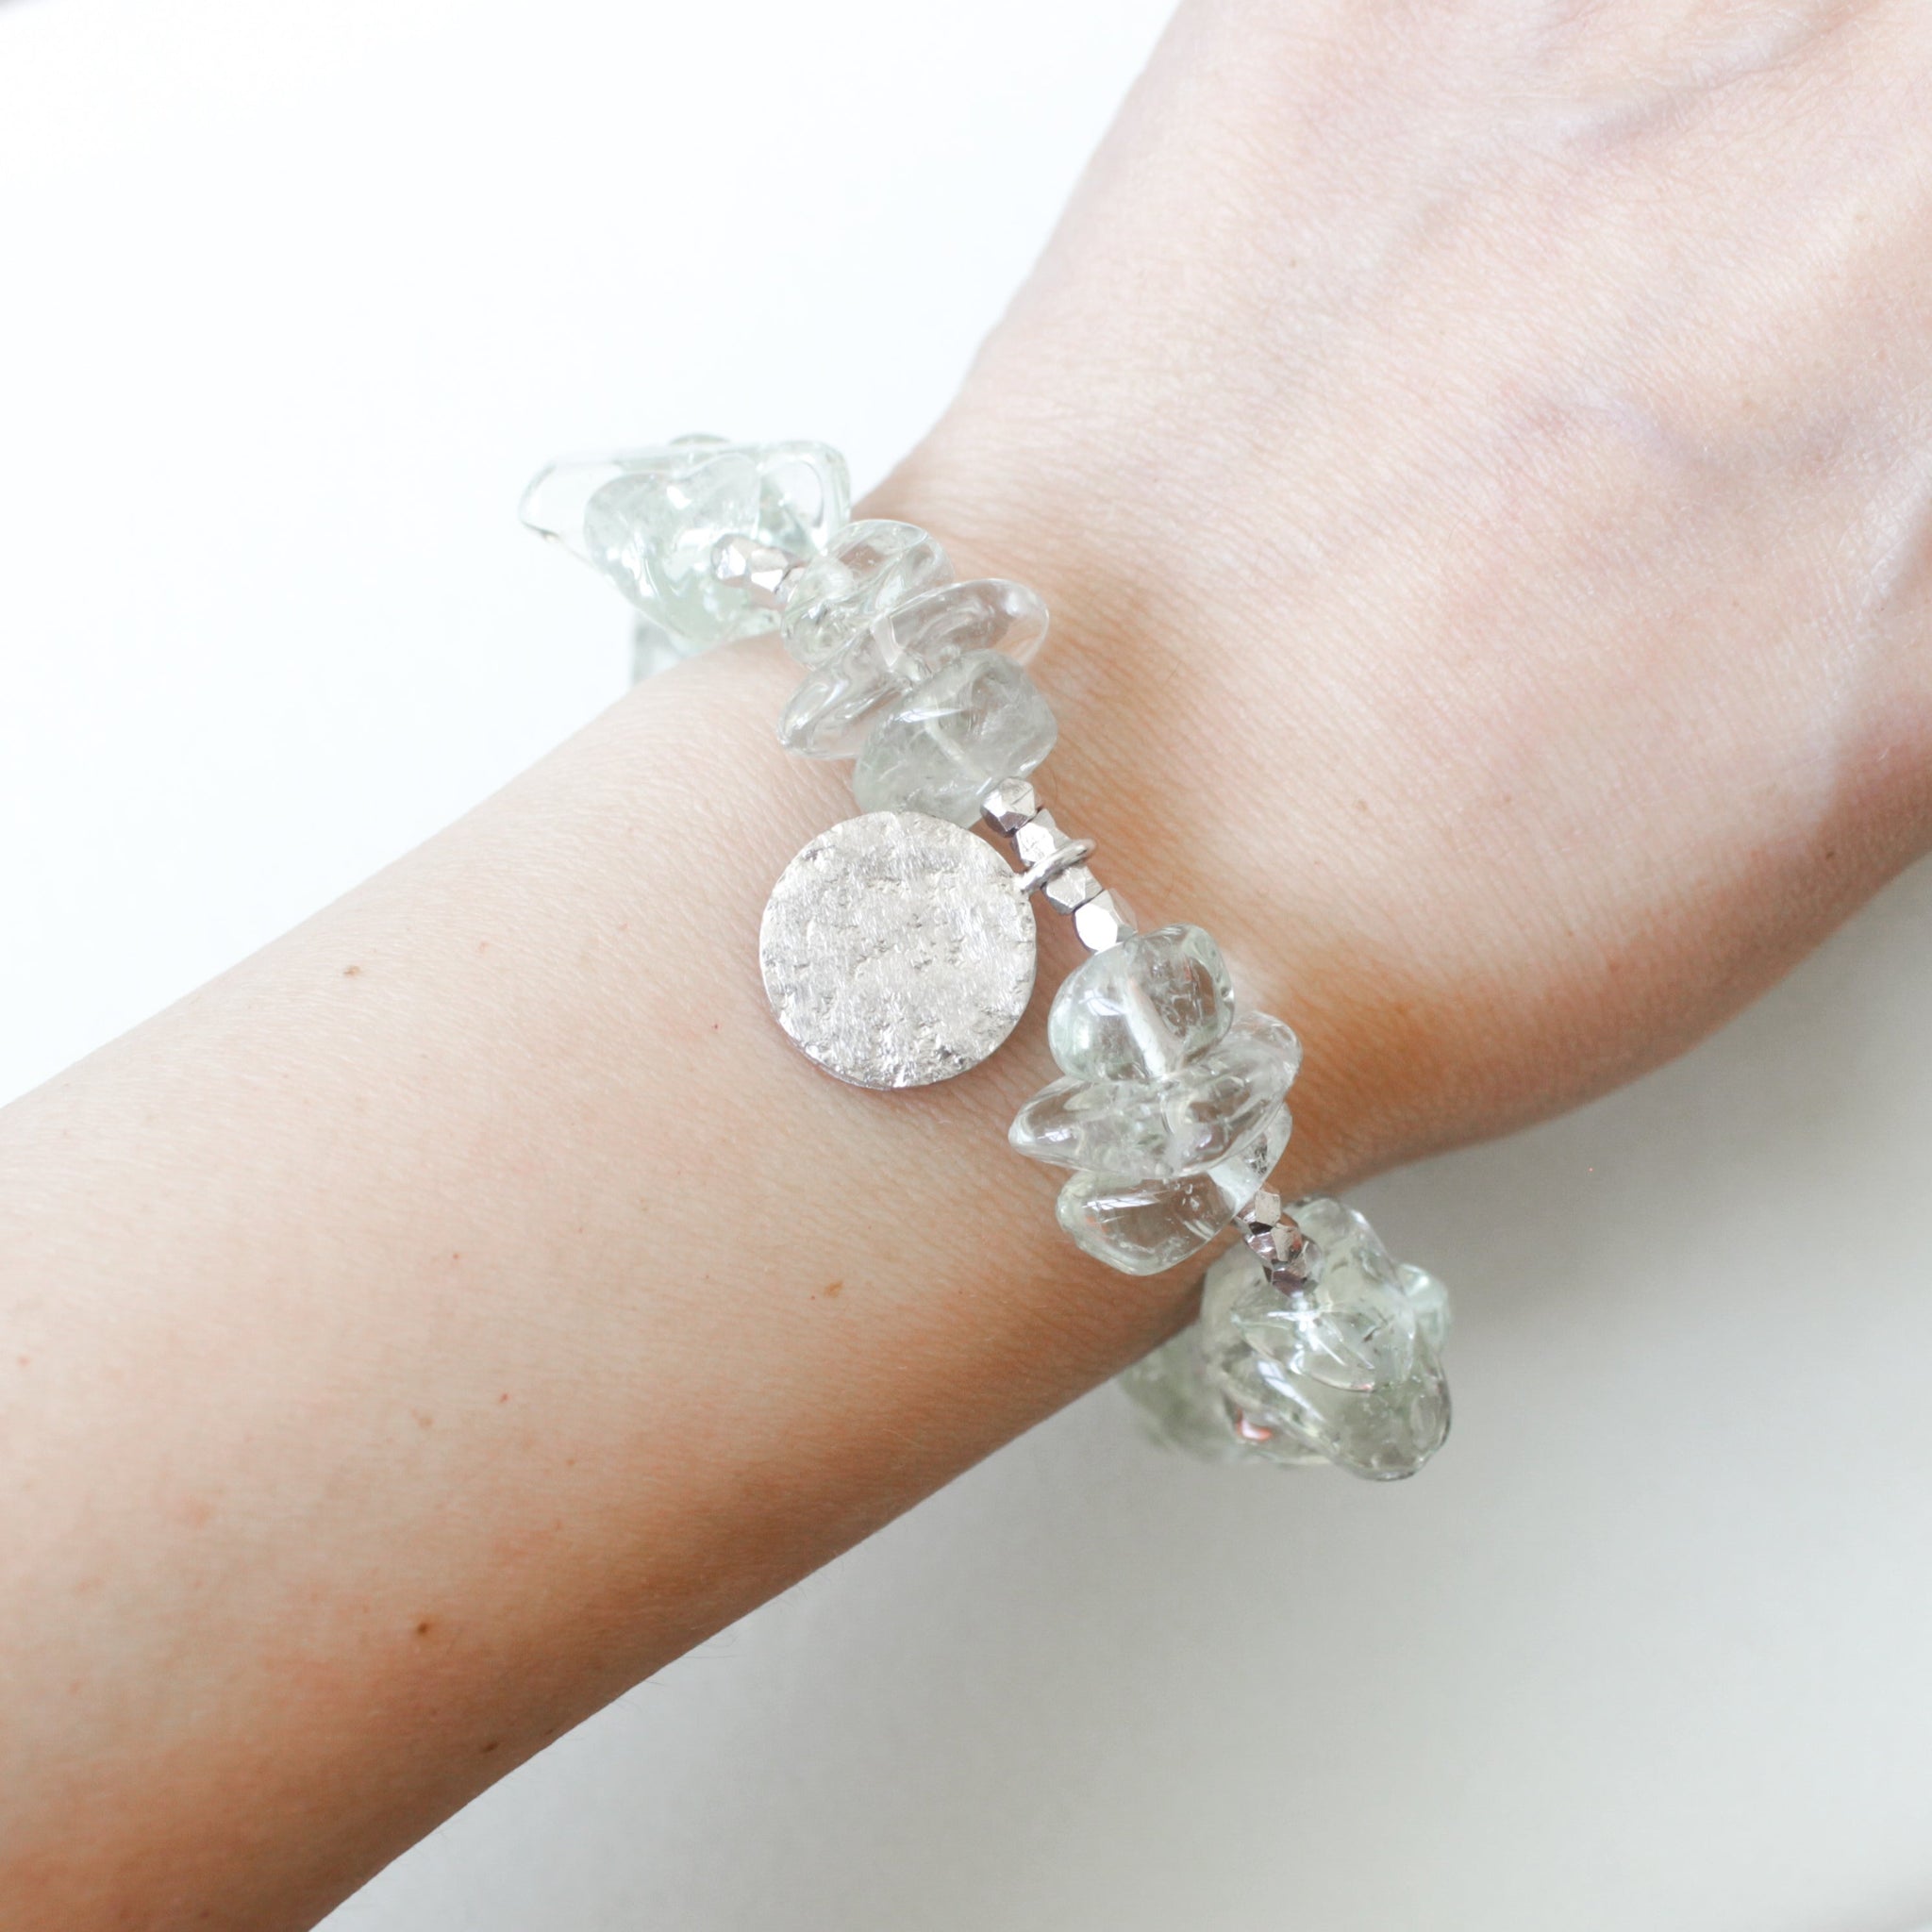 Make A Wish Bracelet - Green Amethyst with Engraved Silver Charm Elastic Bracelet